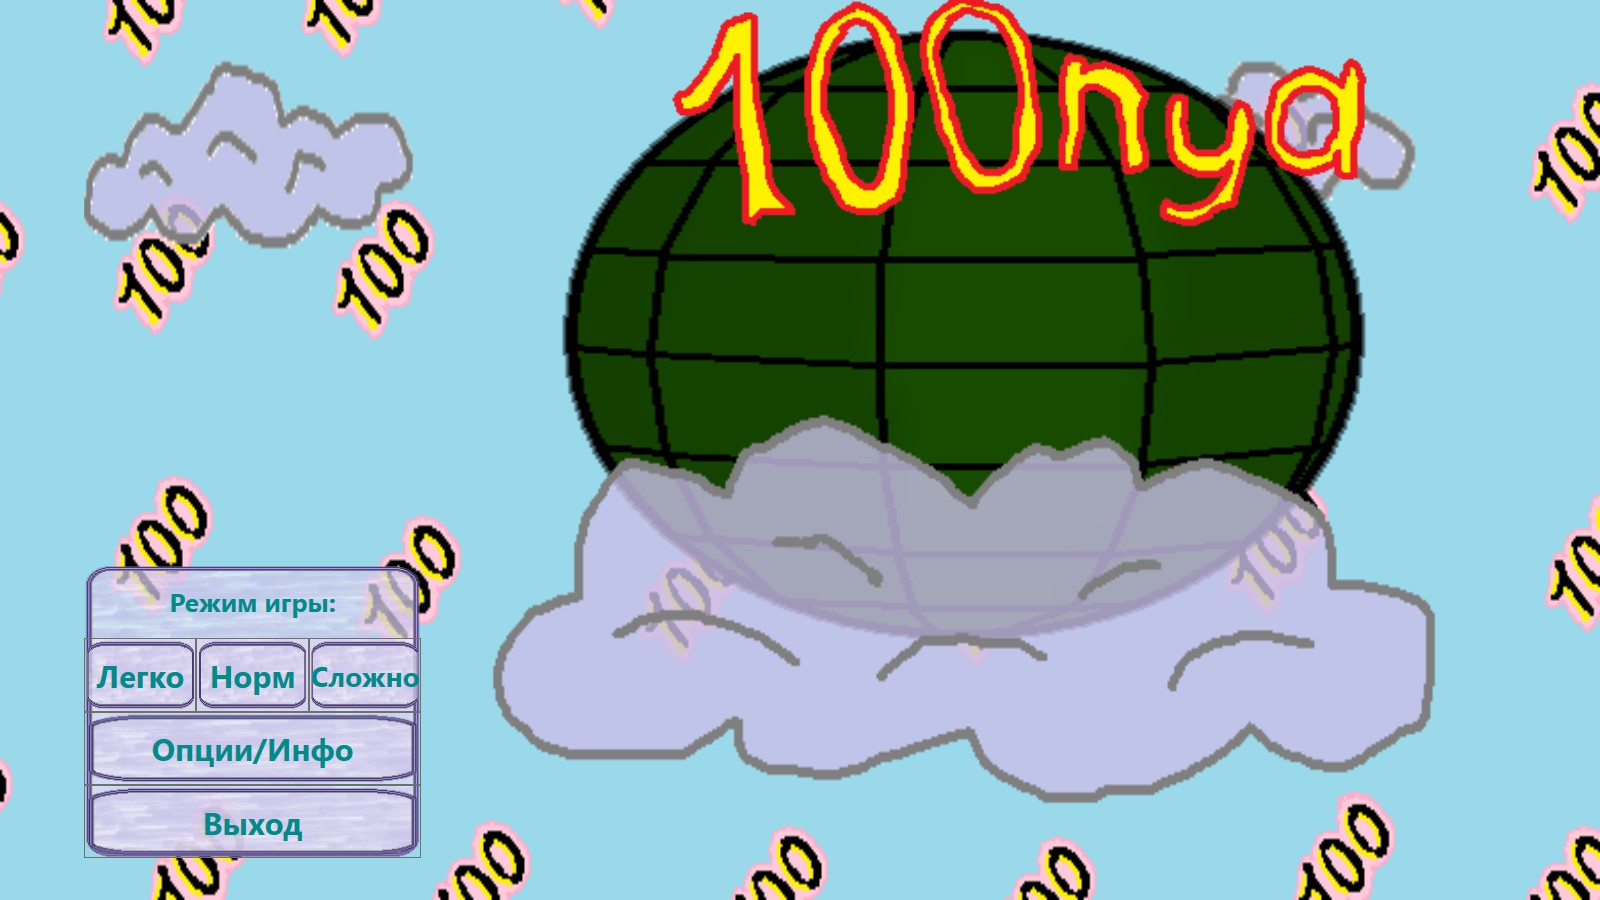 100 nya Featured Screenshot #1